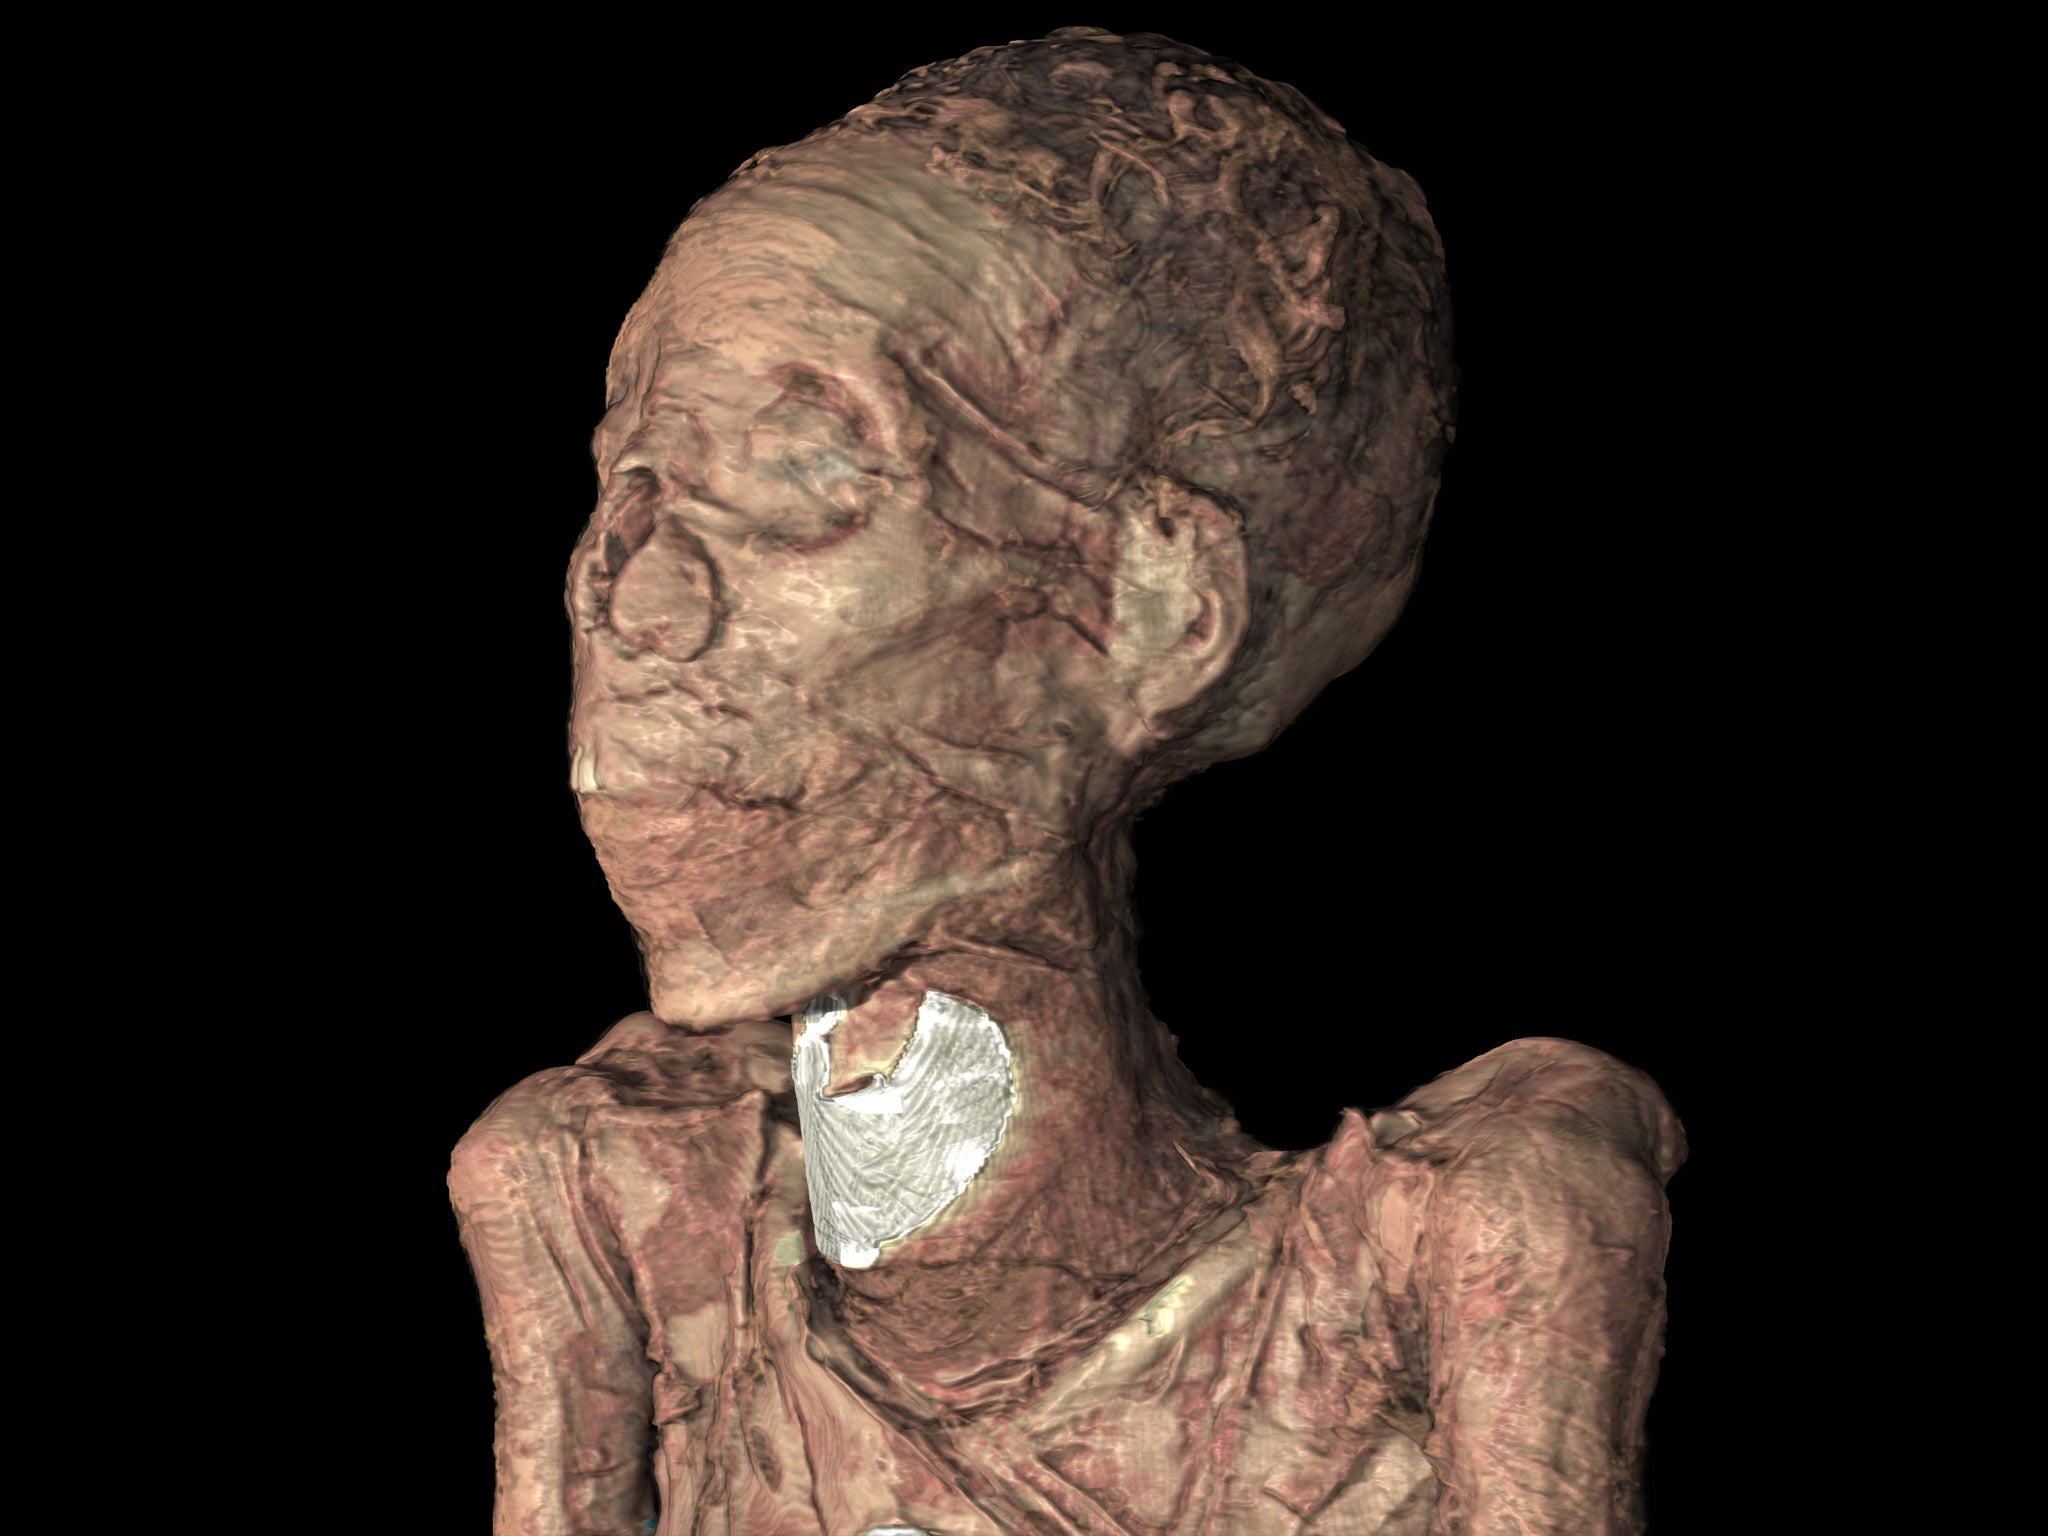 A 3D model of Egyptian chantress Tamut's face